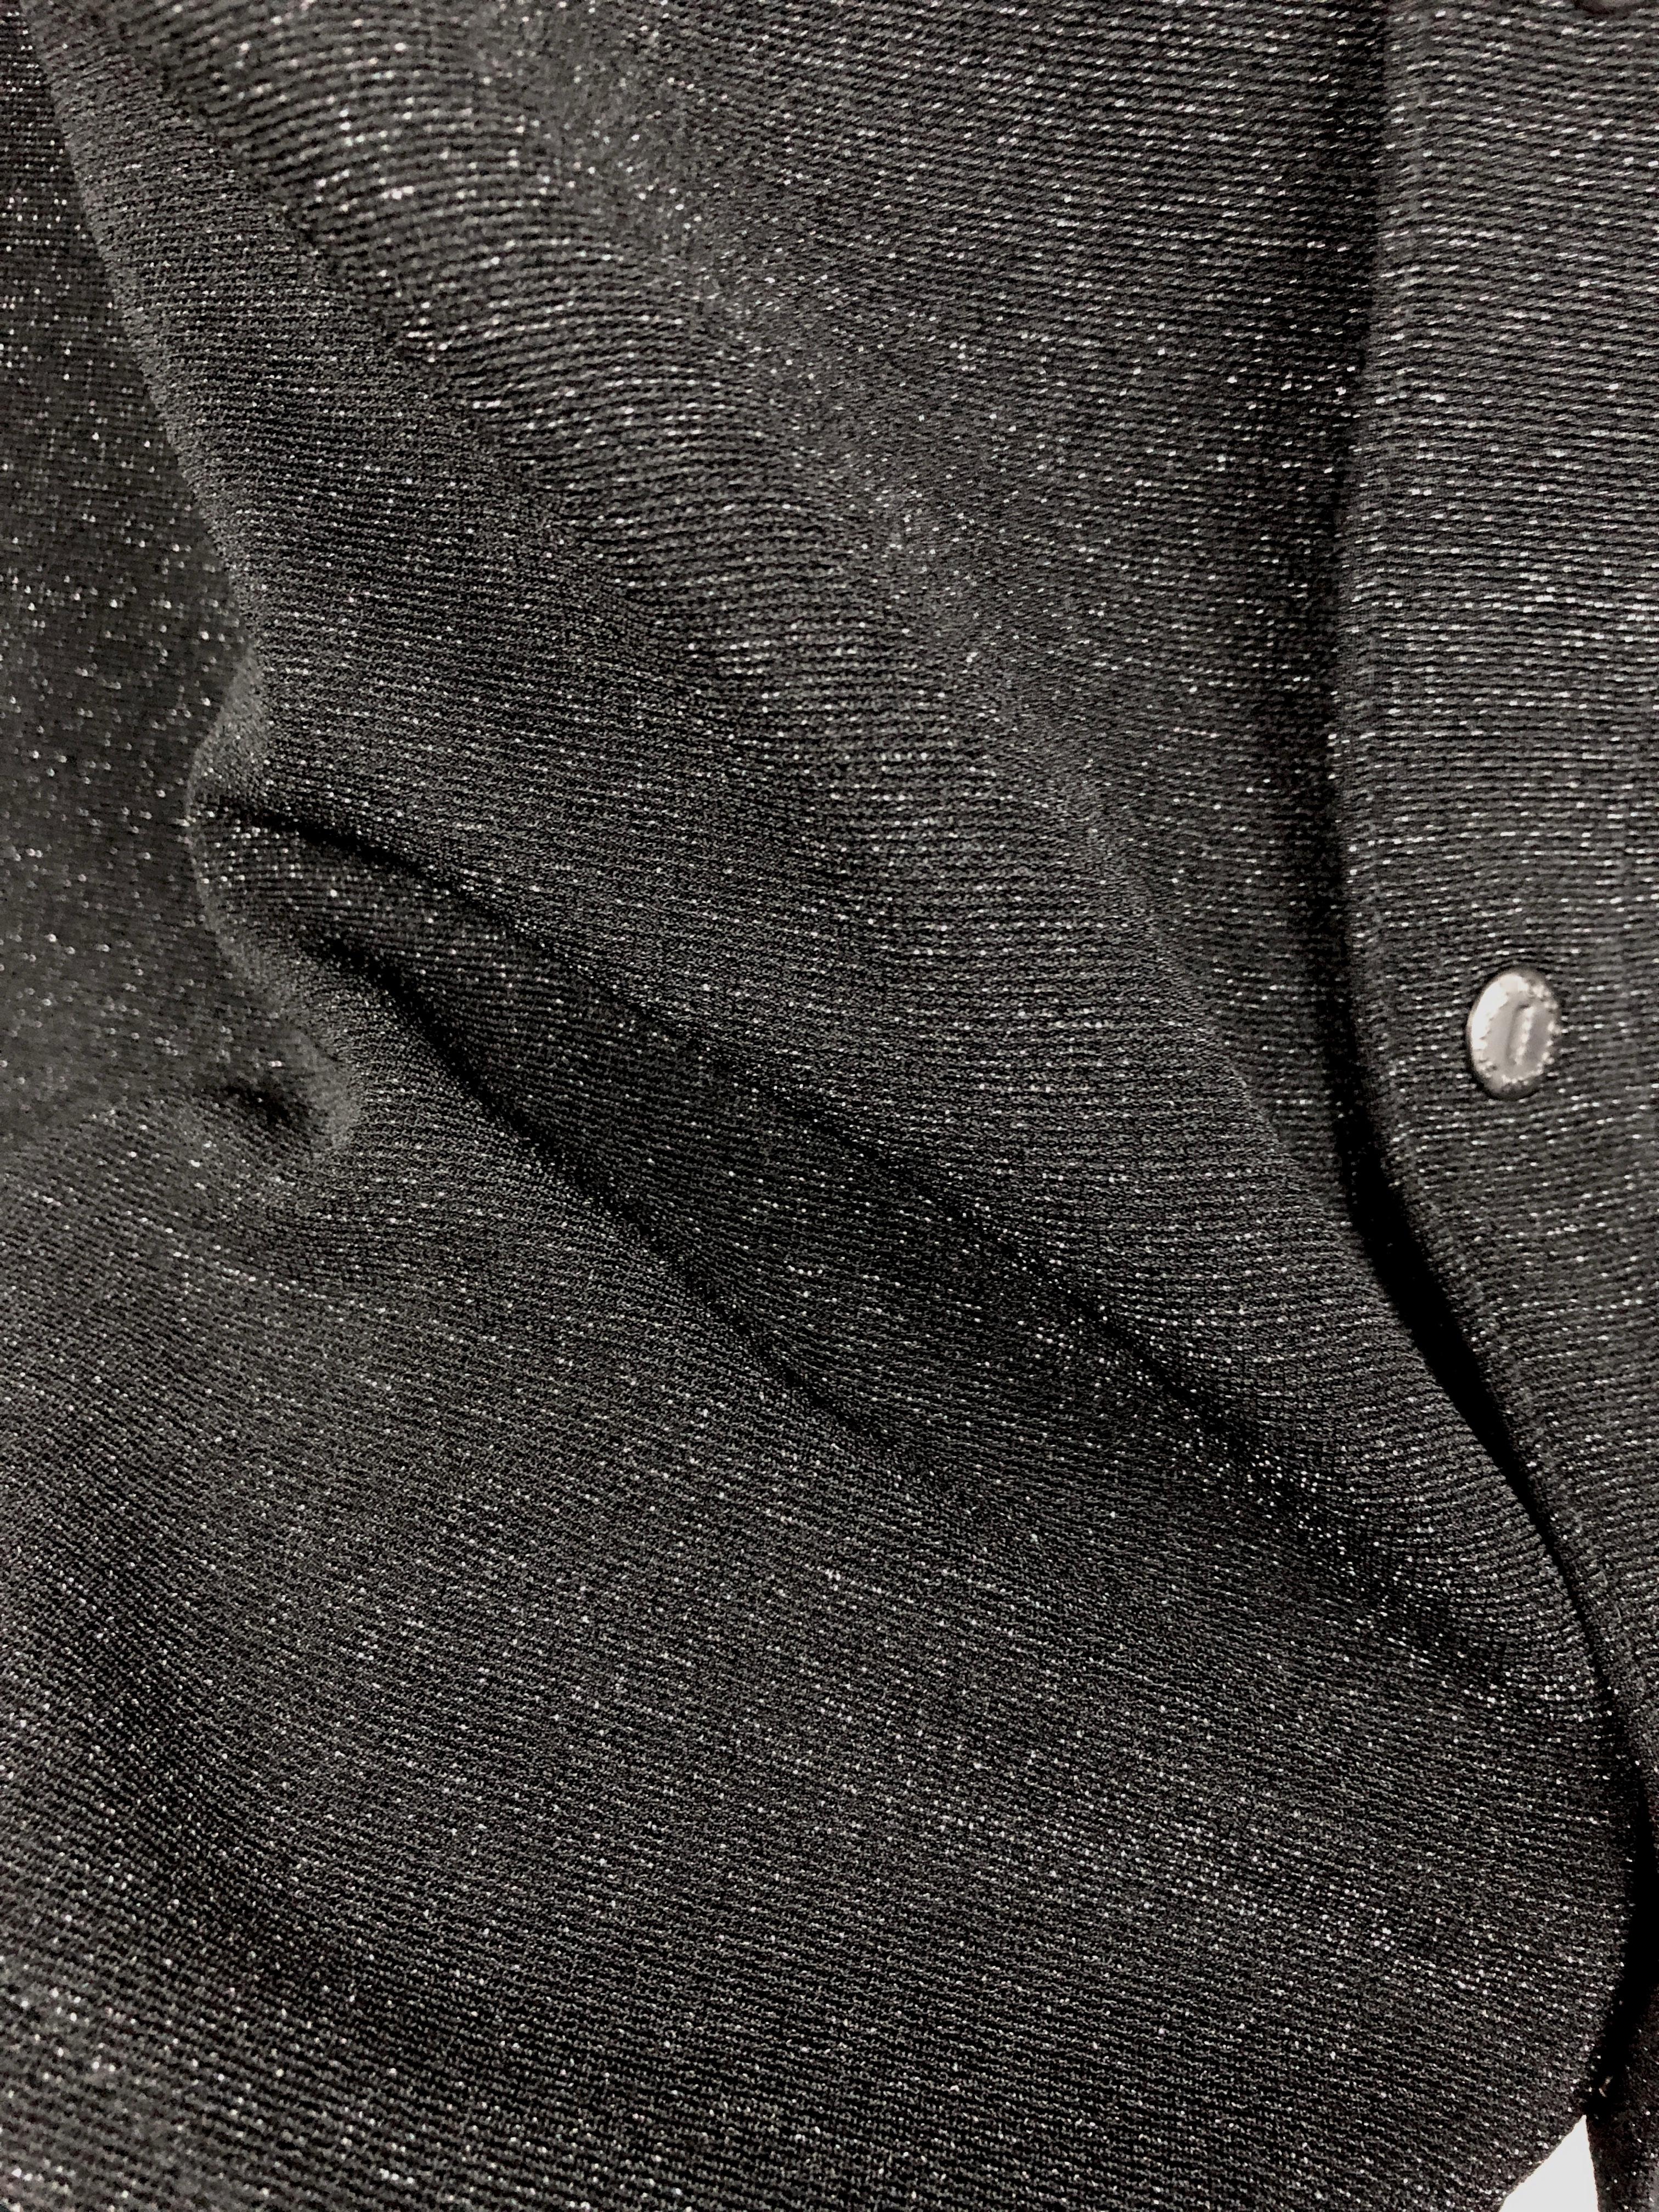 Todd Oldham Black Lurex Men's Button Up, c. 90's, Size M For Sale 5